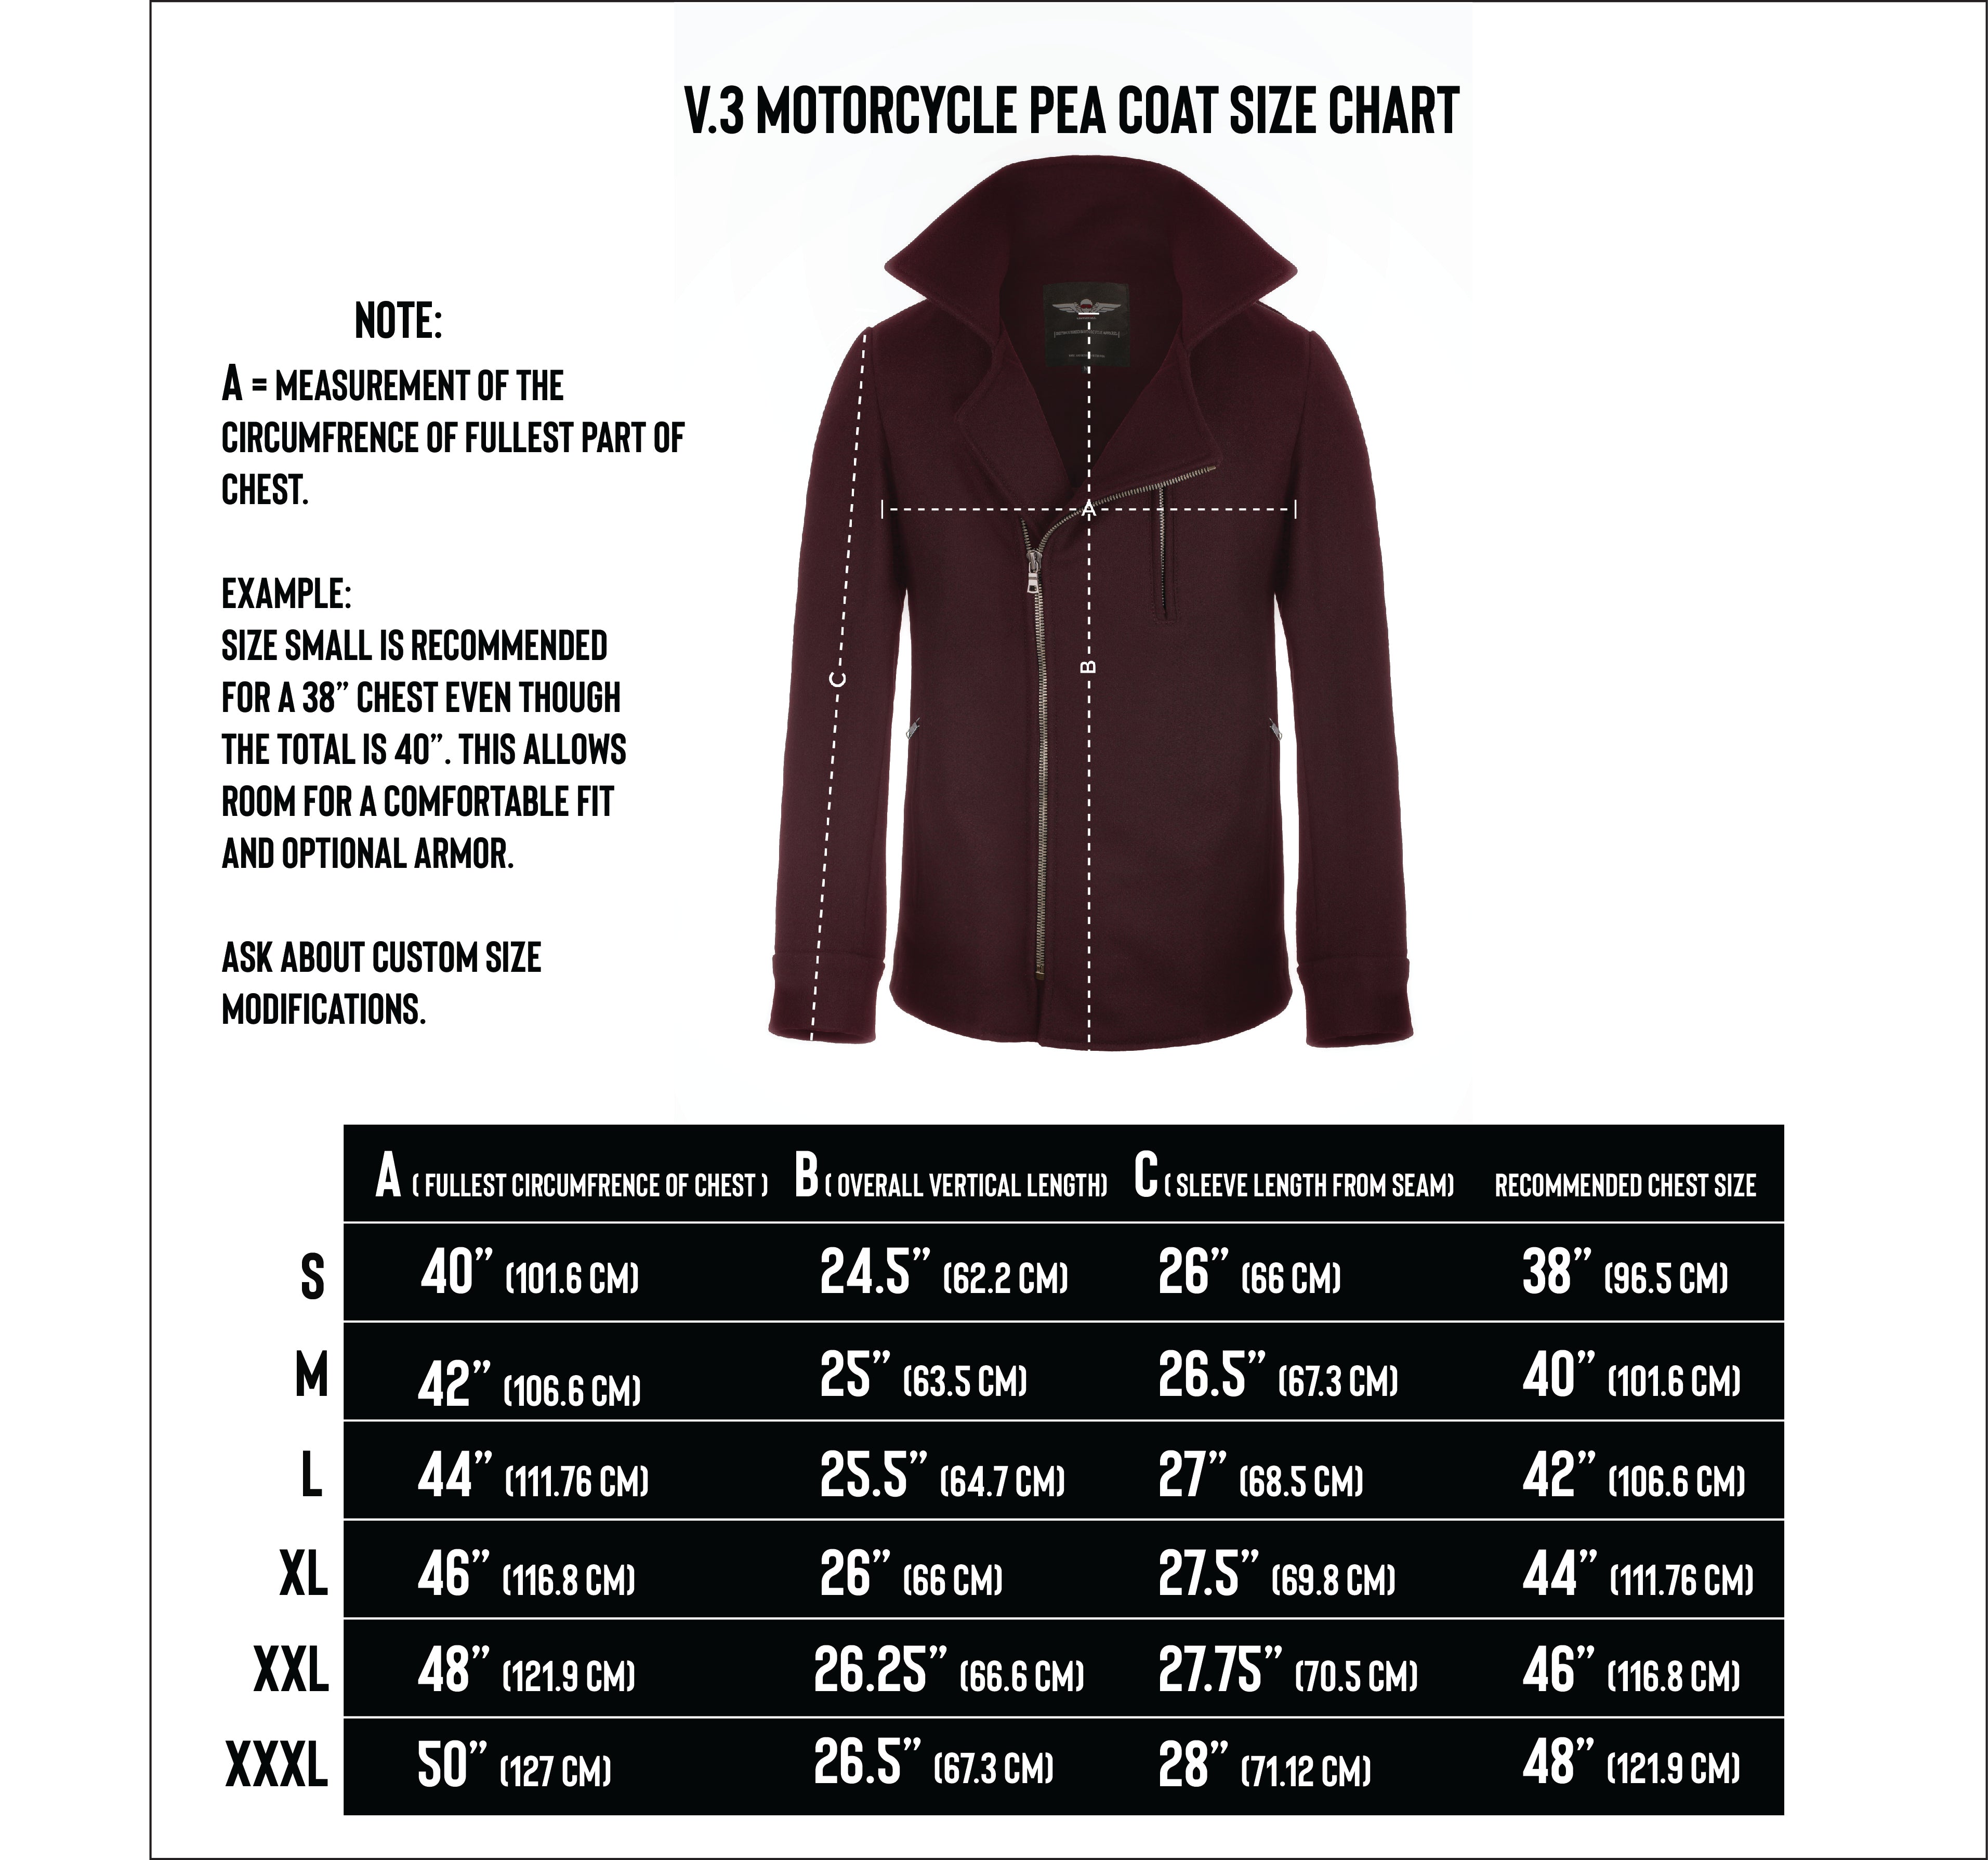 v.3 motorcycle pea coat size chart